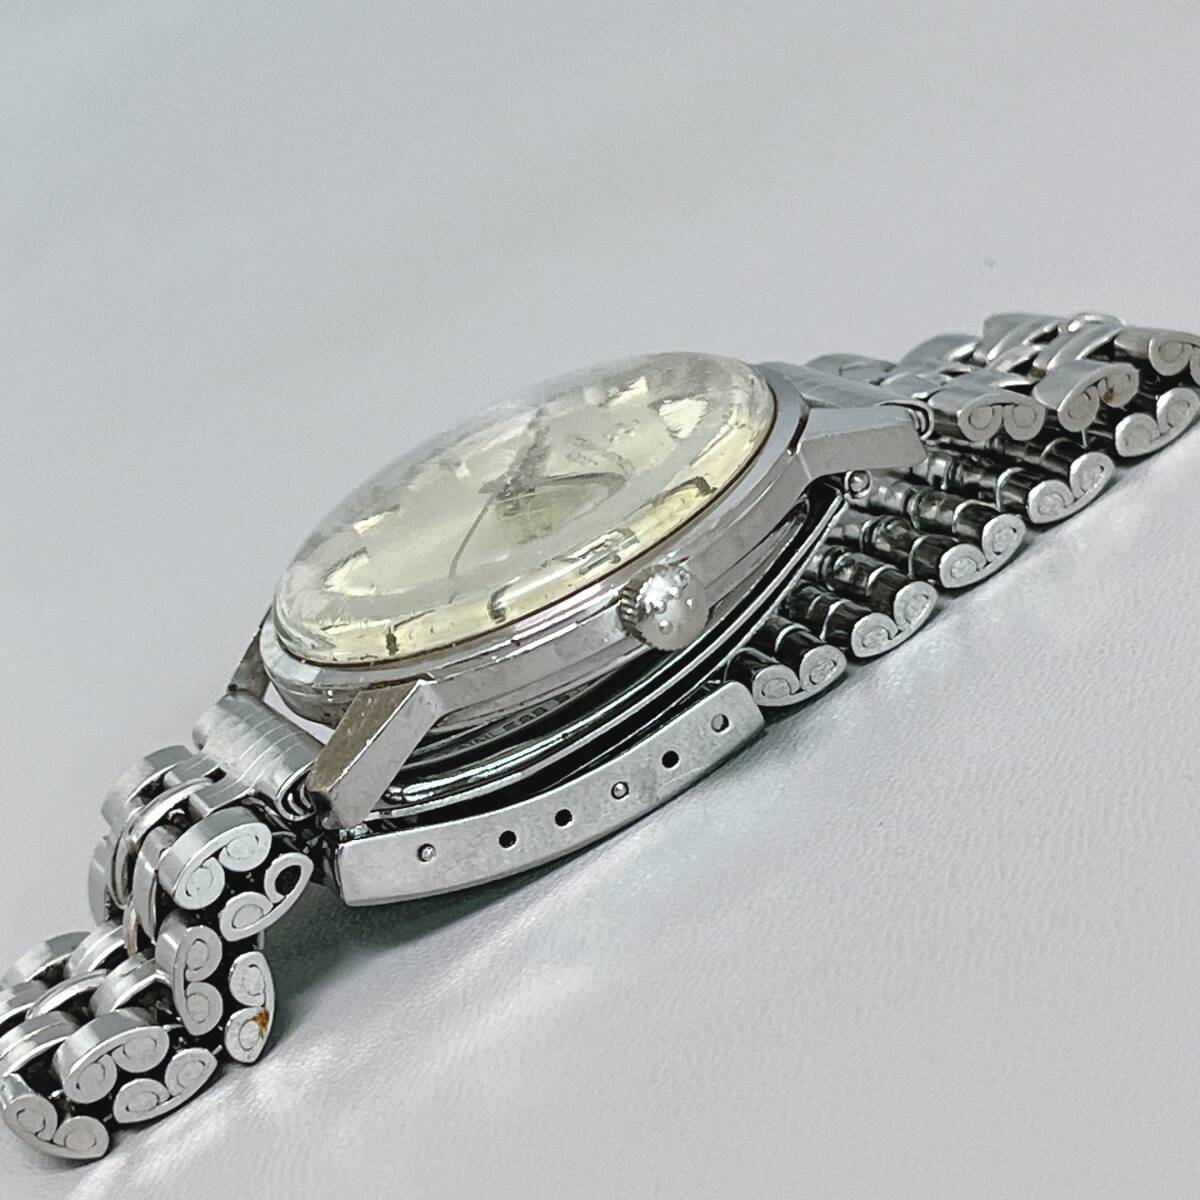 ETERNA MATIC Eterna matic 1000 self-winding watch Date silver face wristwatch 